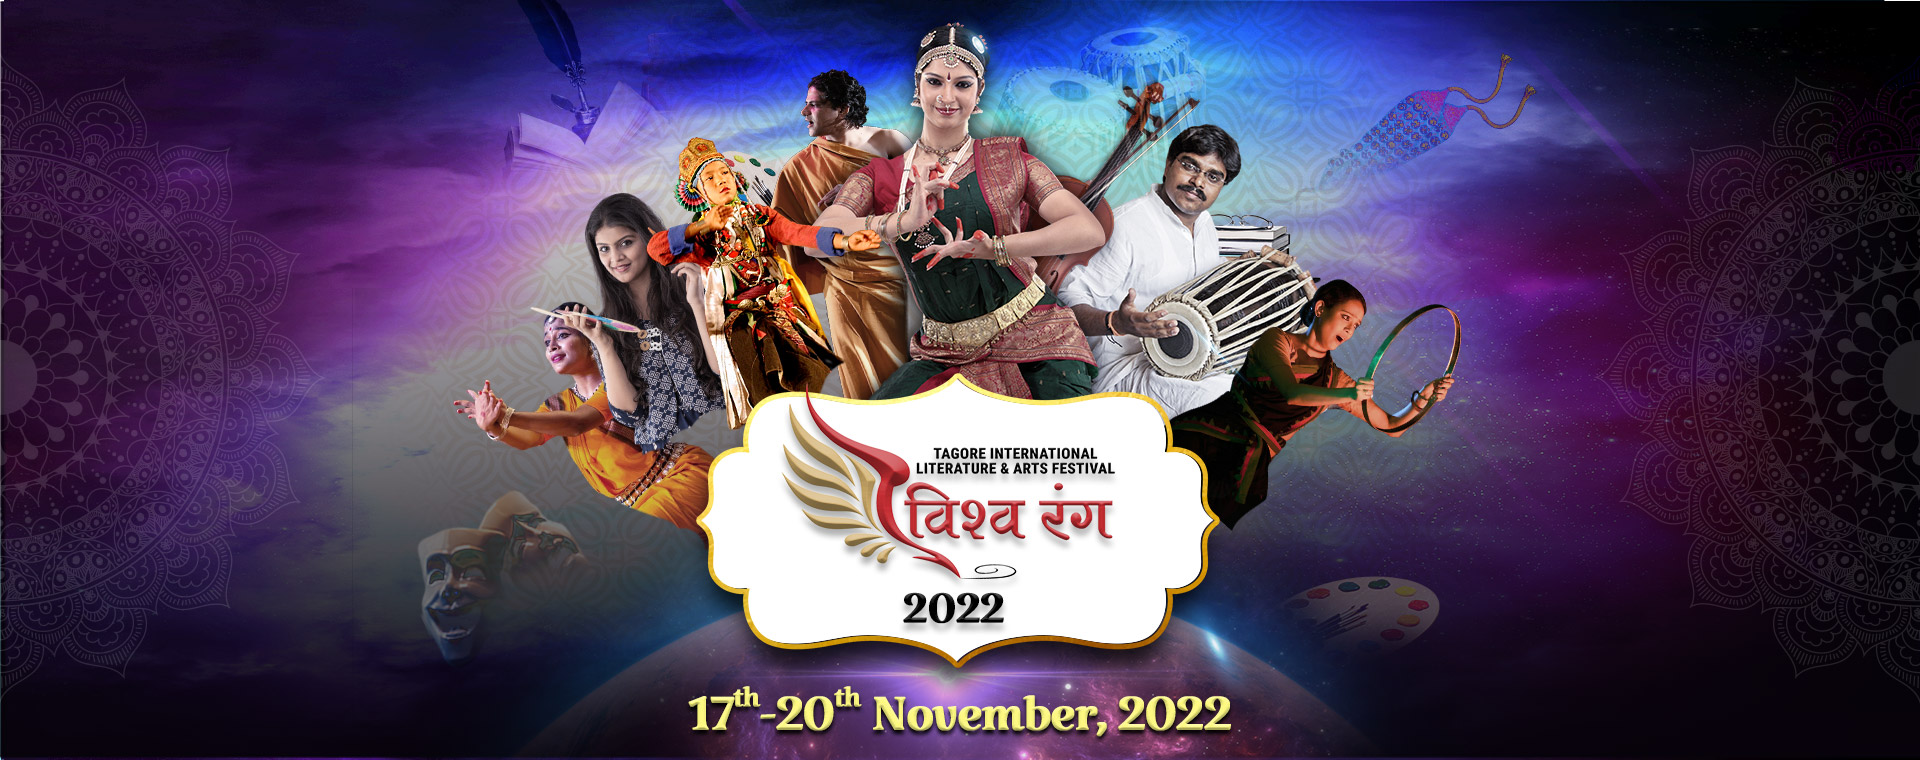 Tagore International Literature and Arts Festival 2022